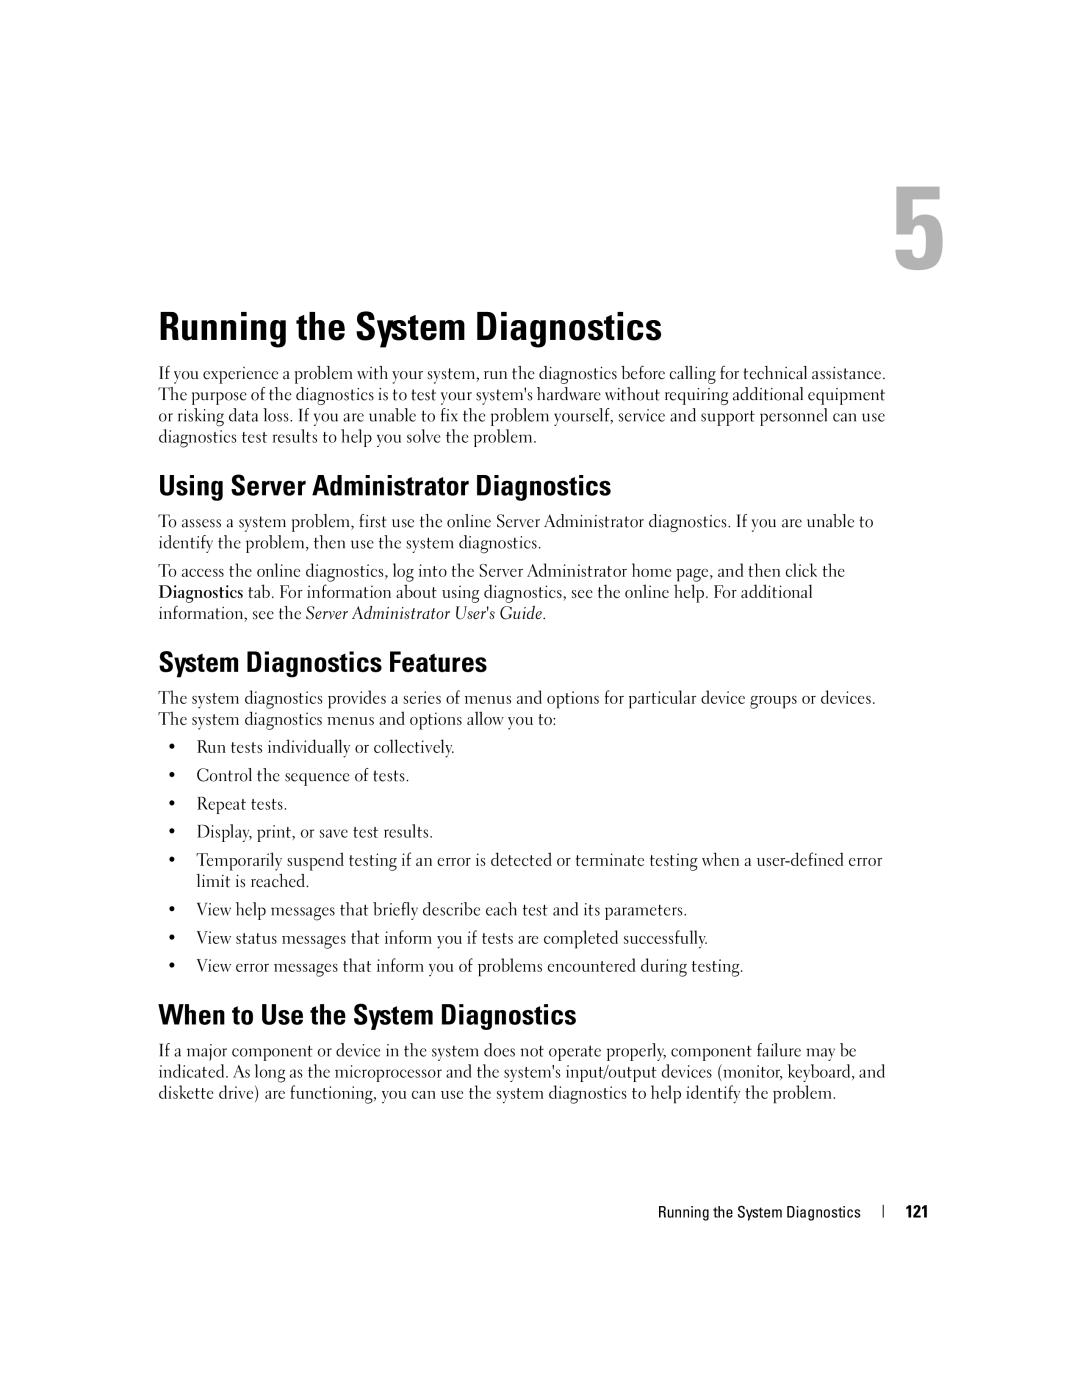 Dell 1900 Using Server Administrator Diagnostics, System Diagnostics Features, When to Use the System Diagnostics, 121 